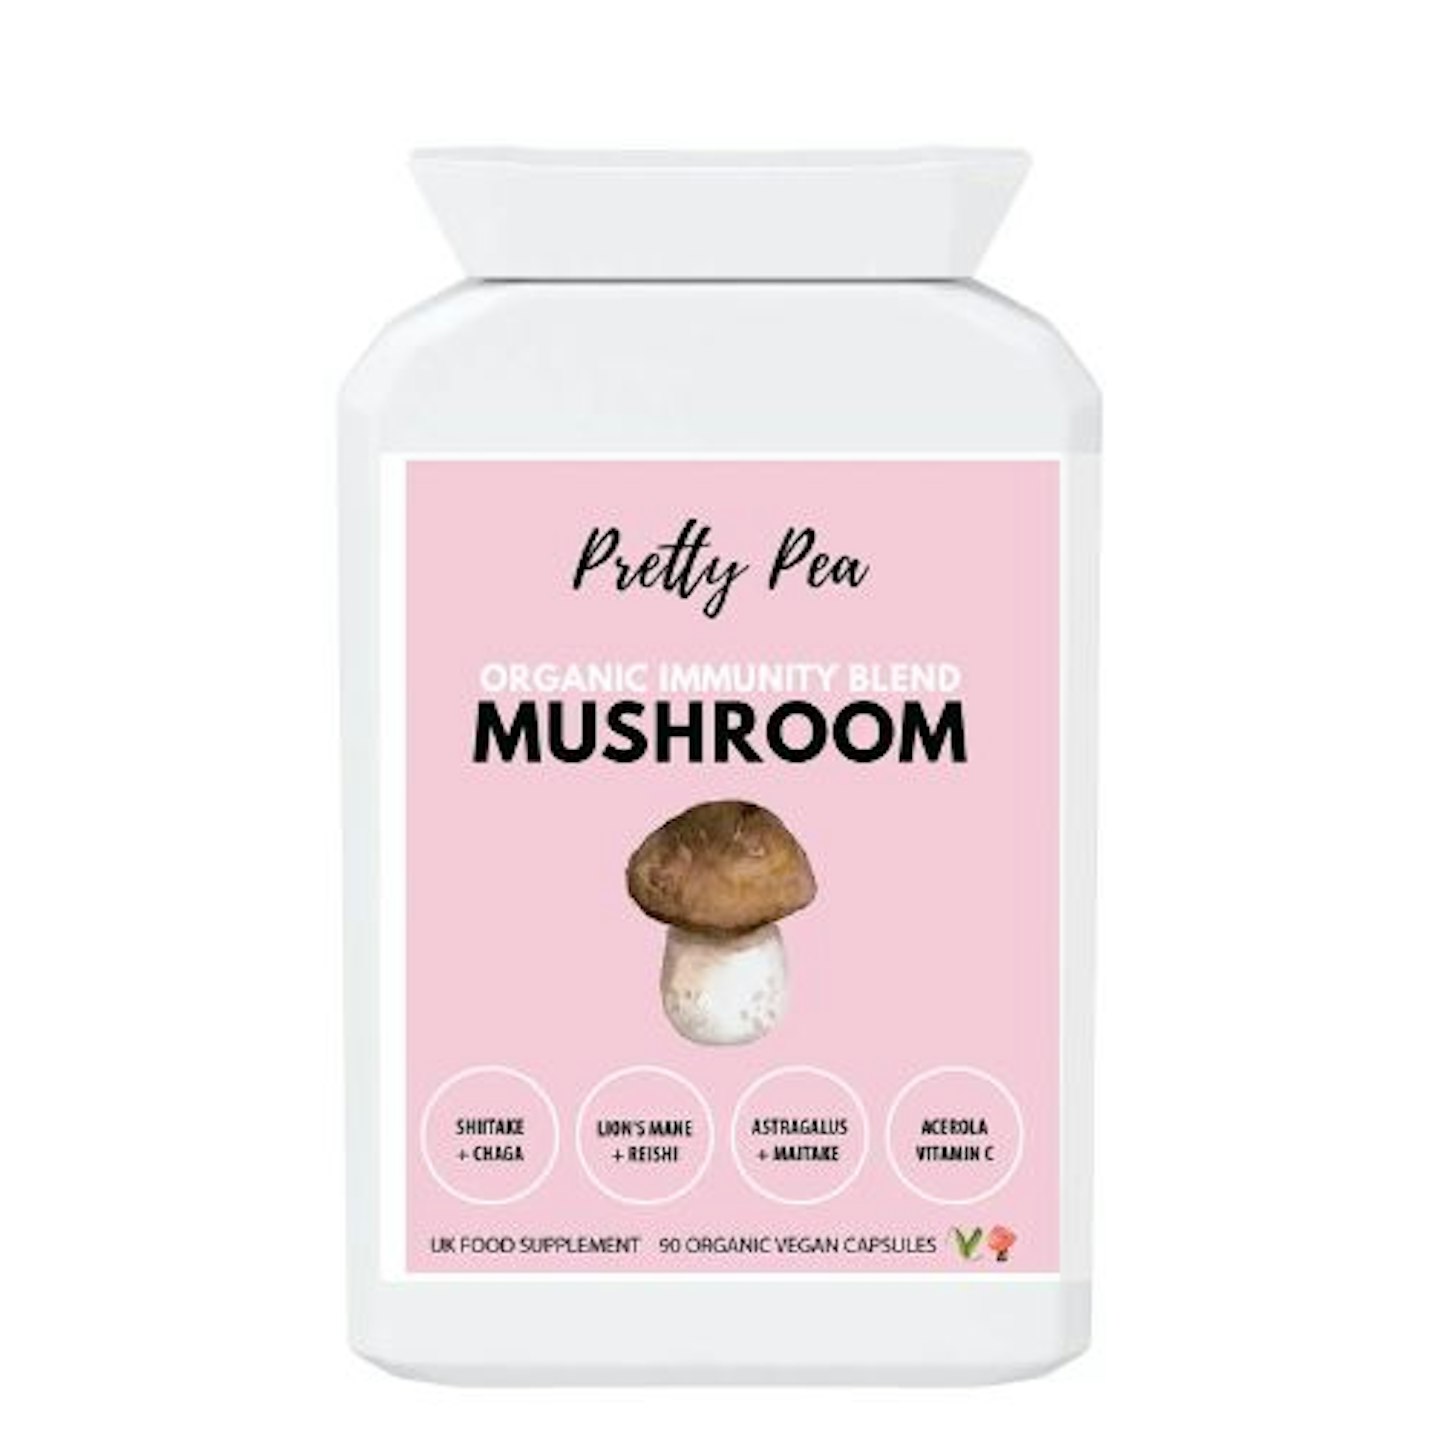 Pretty Pea Mushroom Immunity